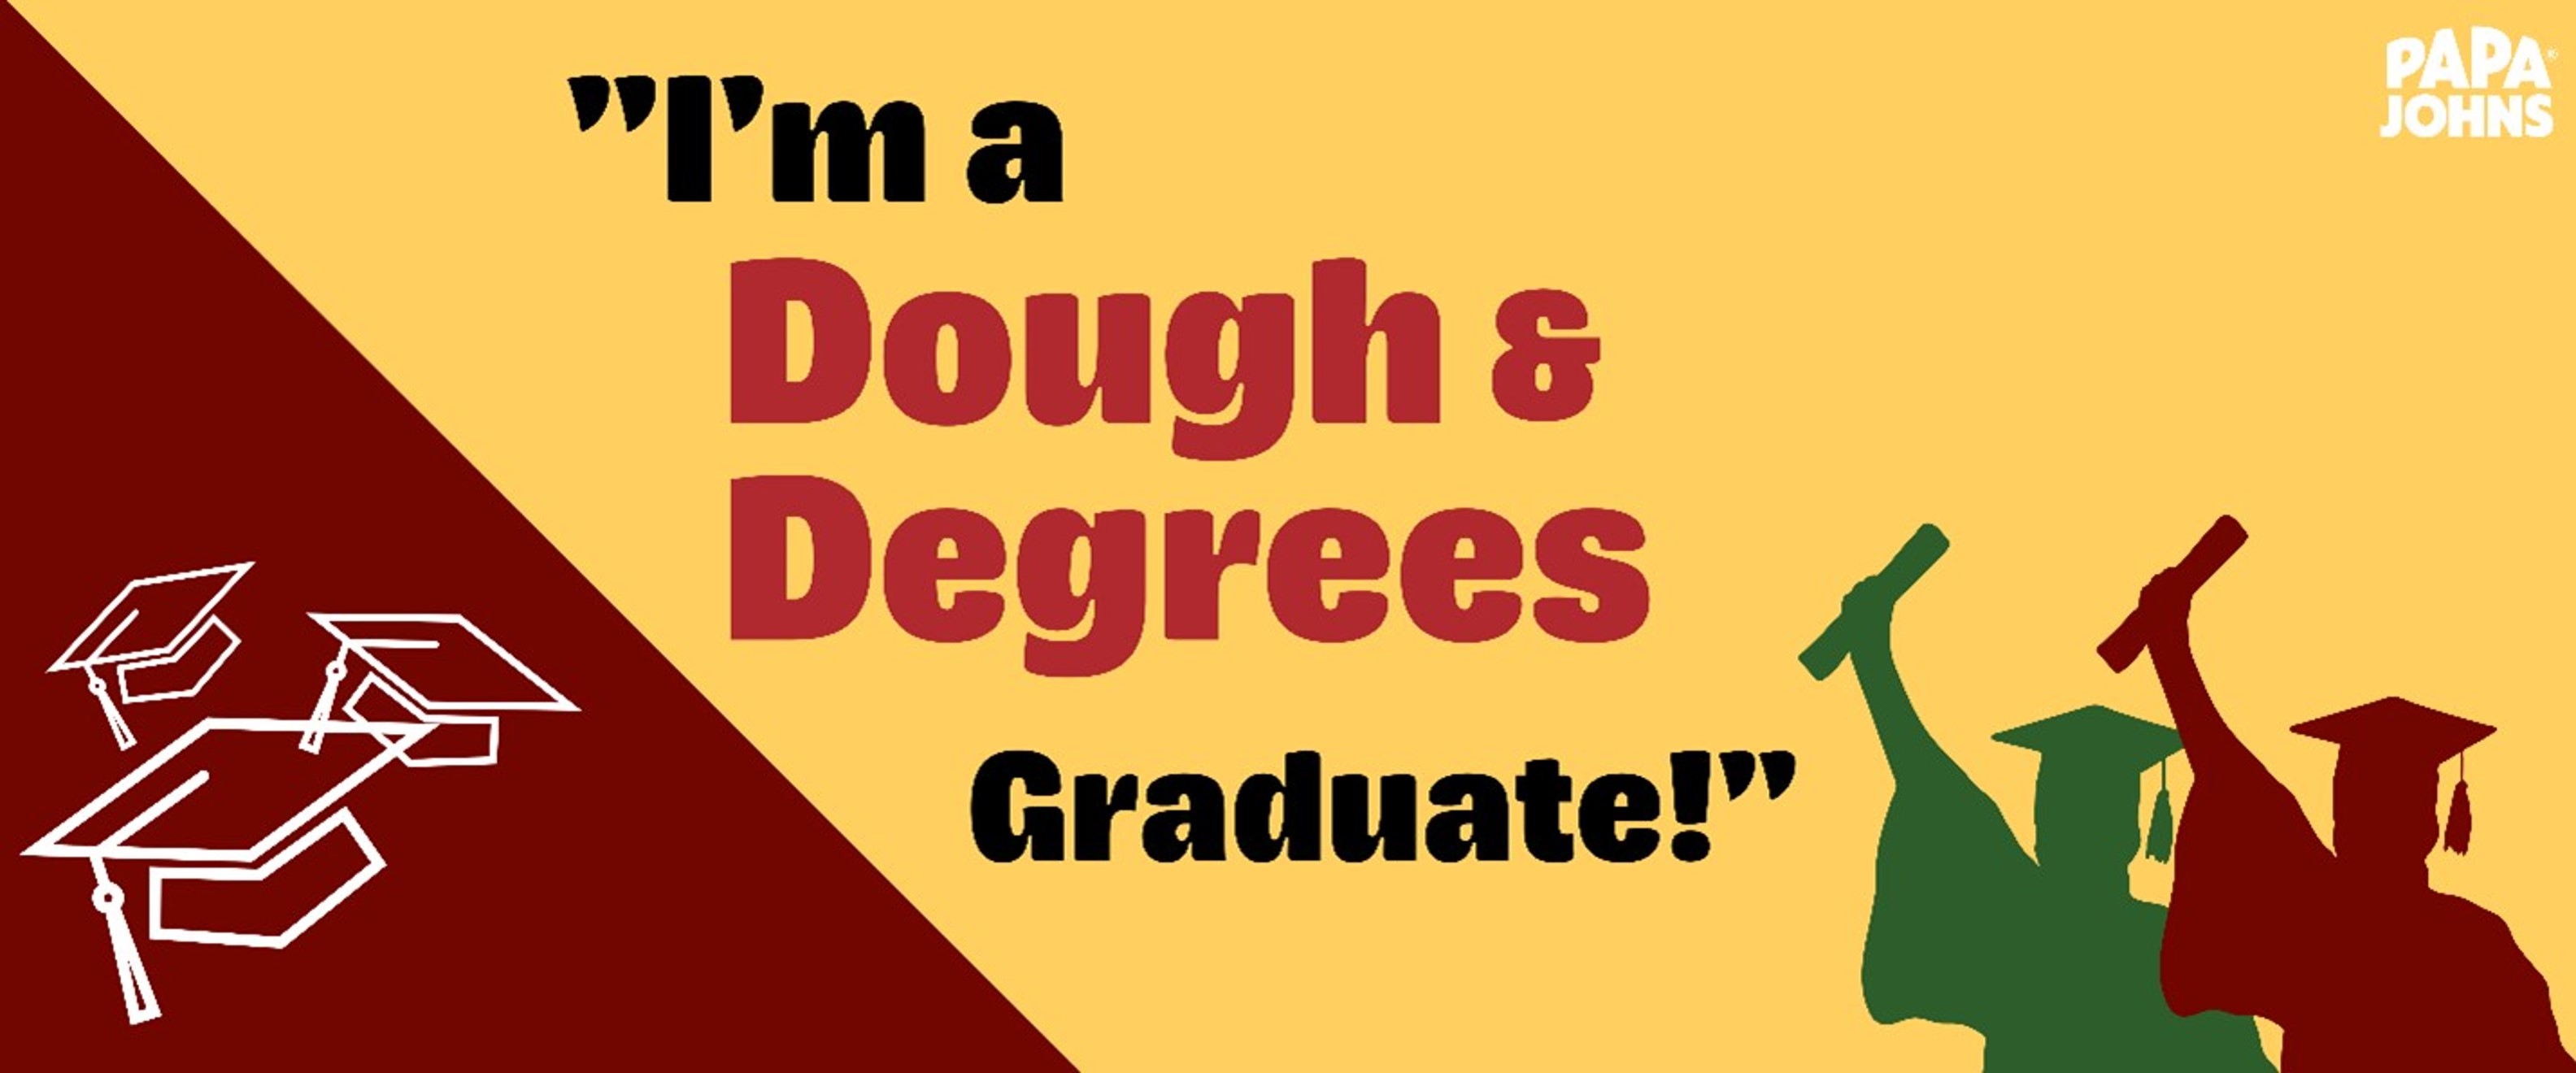 "I'm a Dough & Degrees Graduate!"